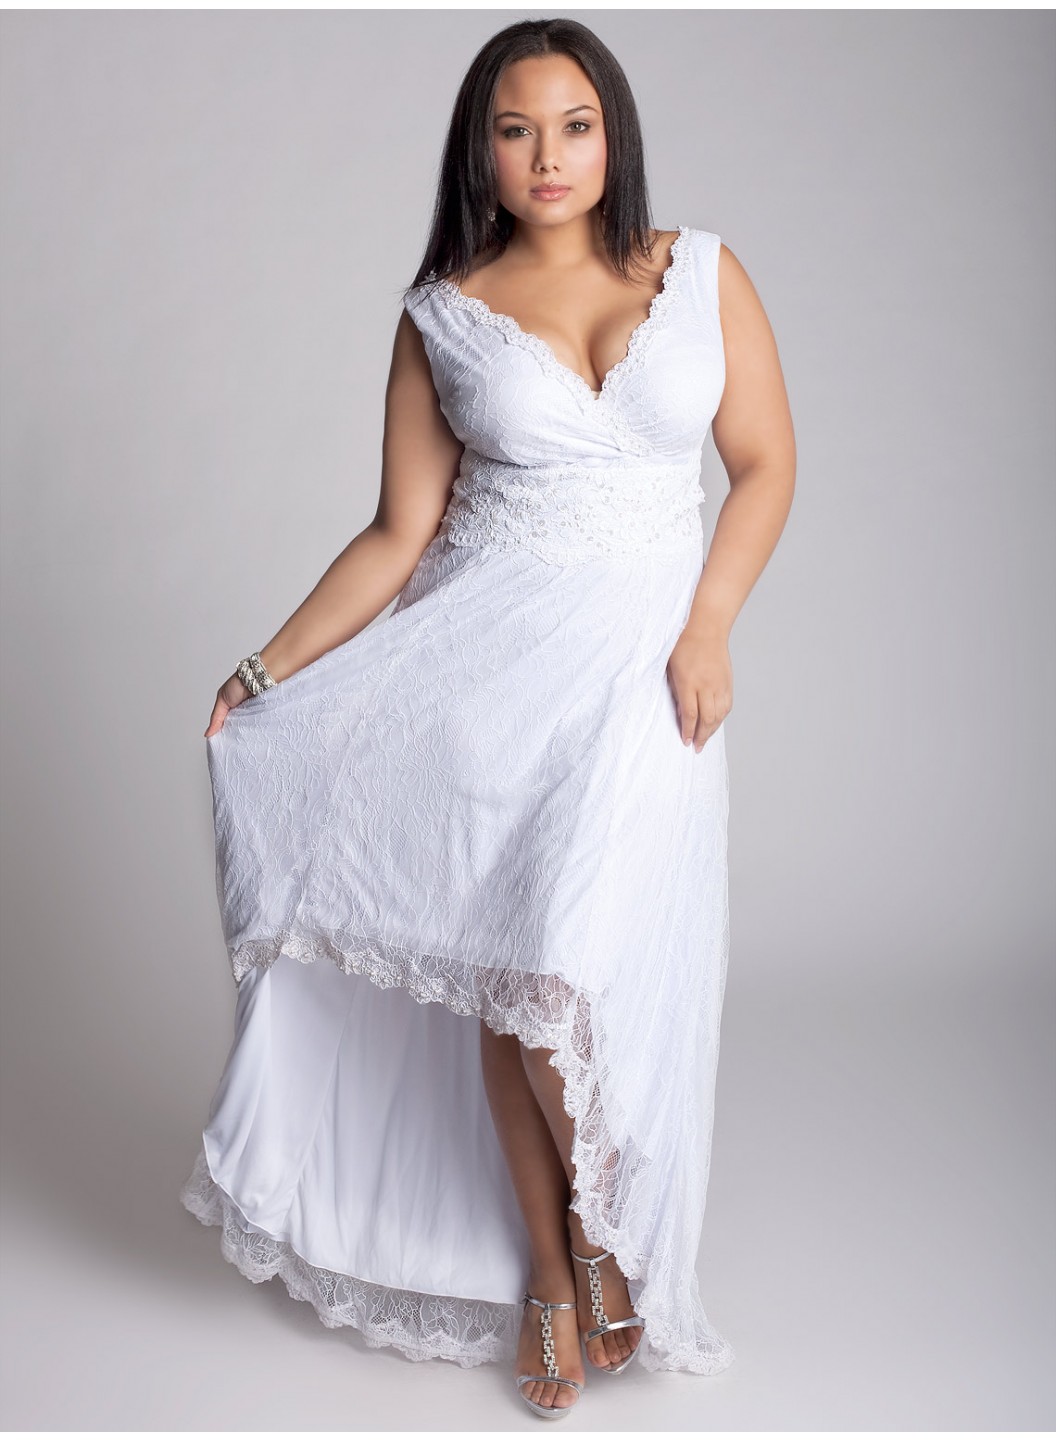 Plus Size Wedding Dresses | DressedUpGirl.com